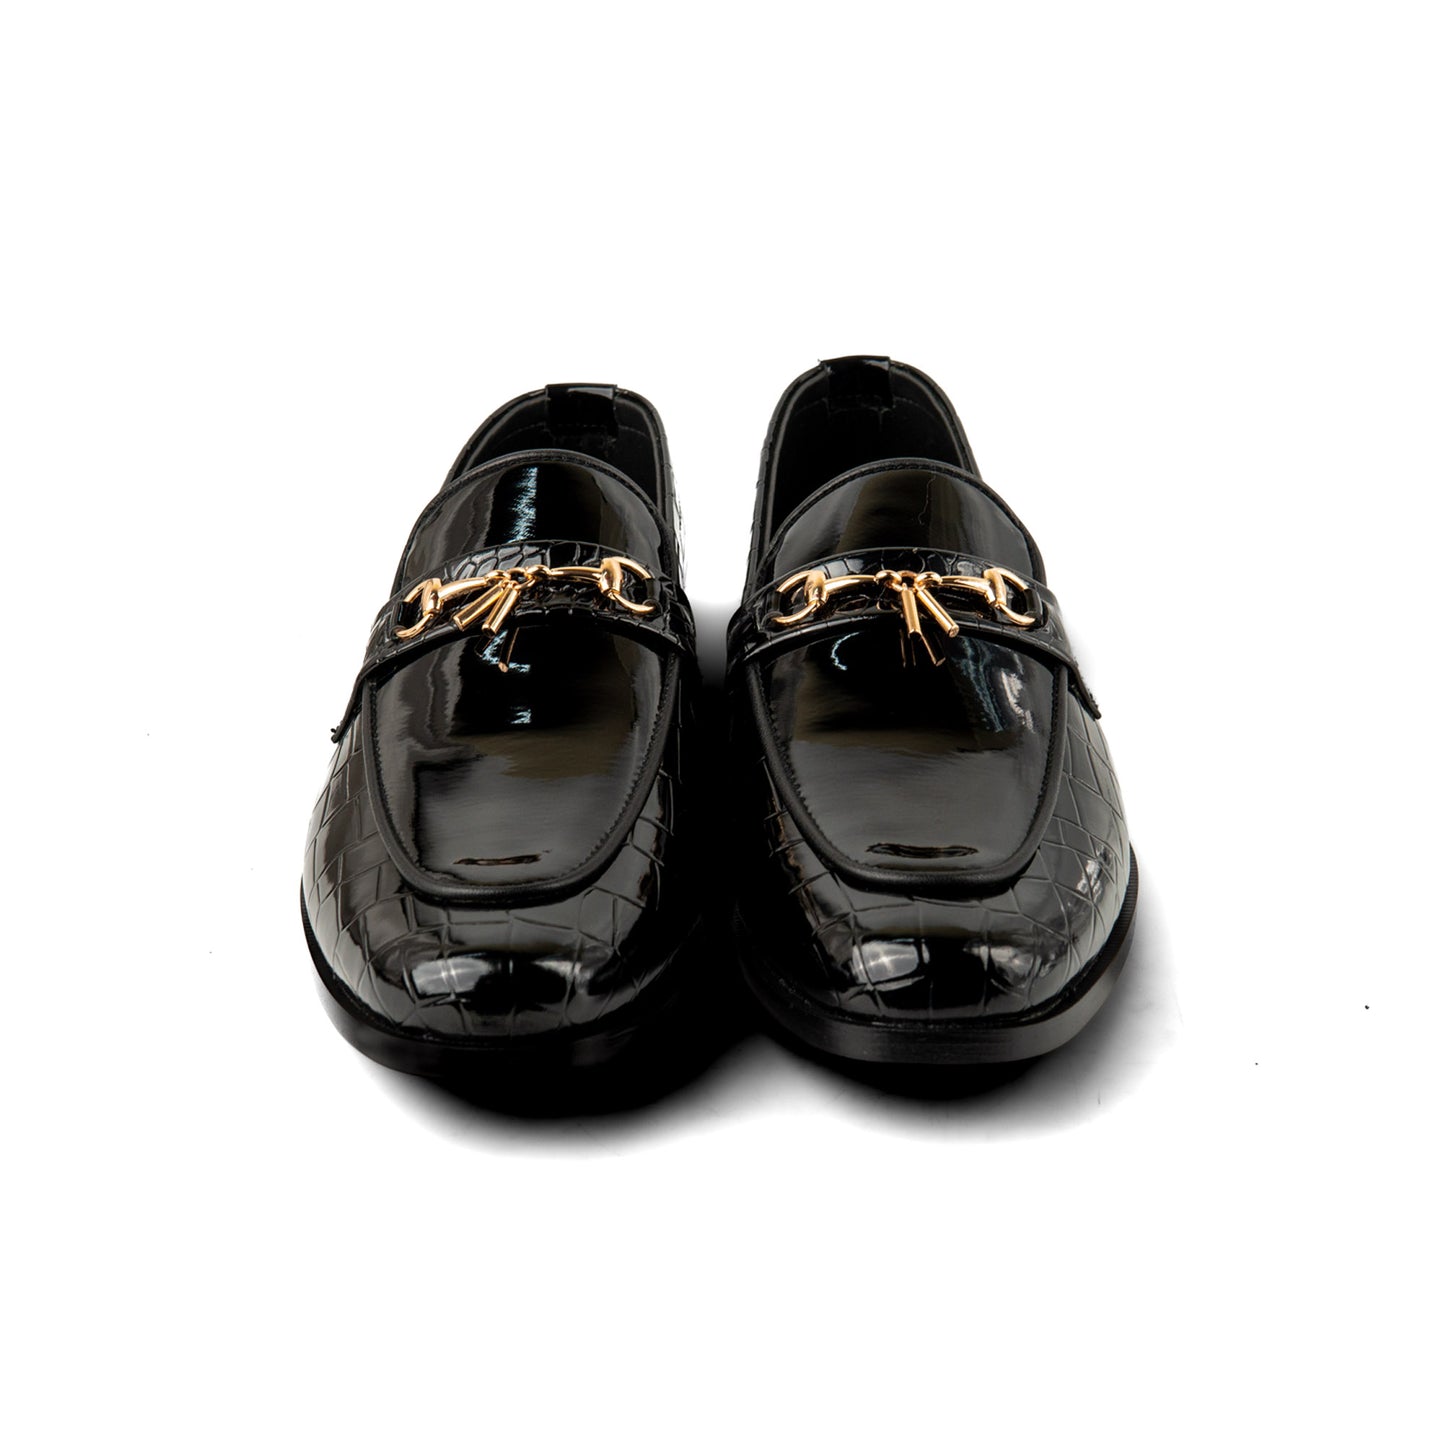 Twin Metal Tussle Black Shoes